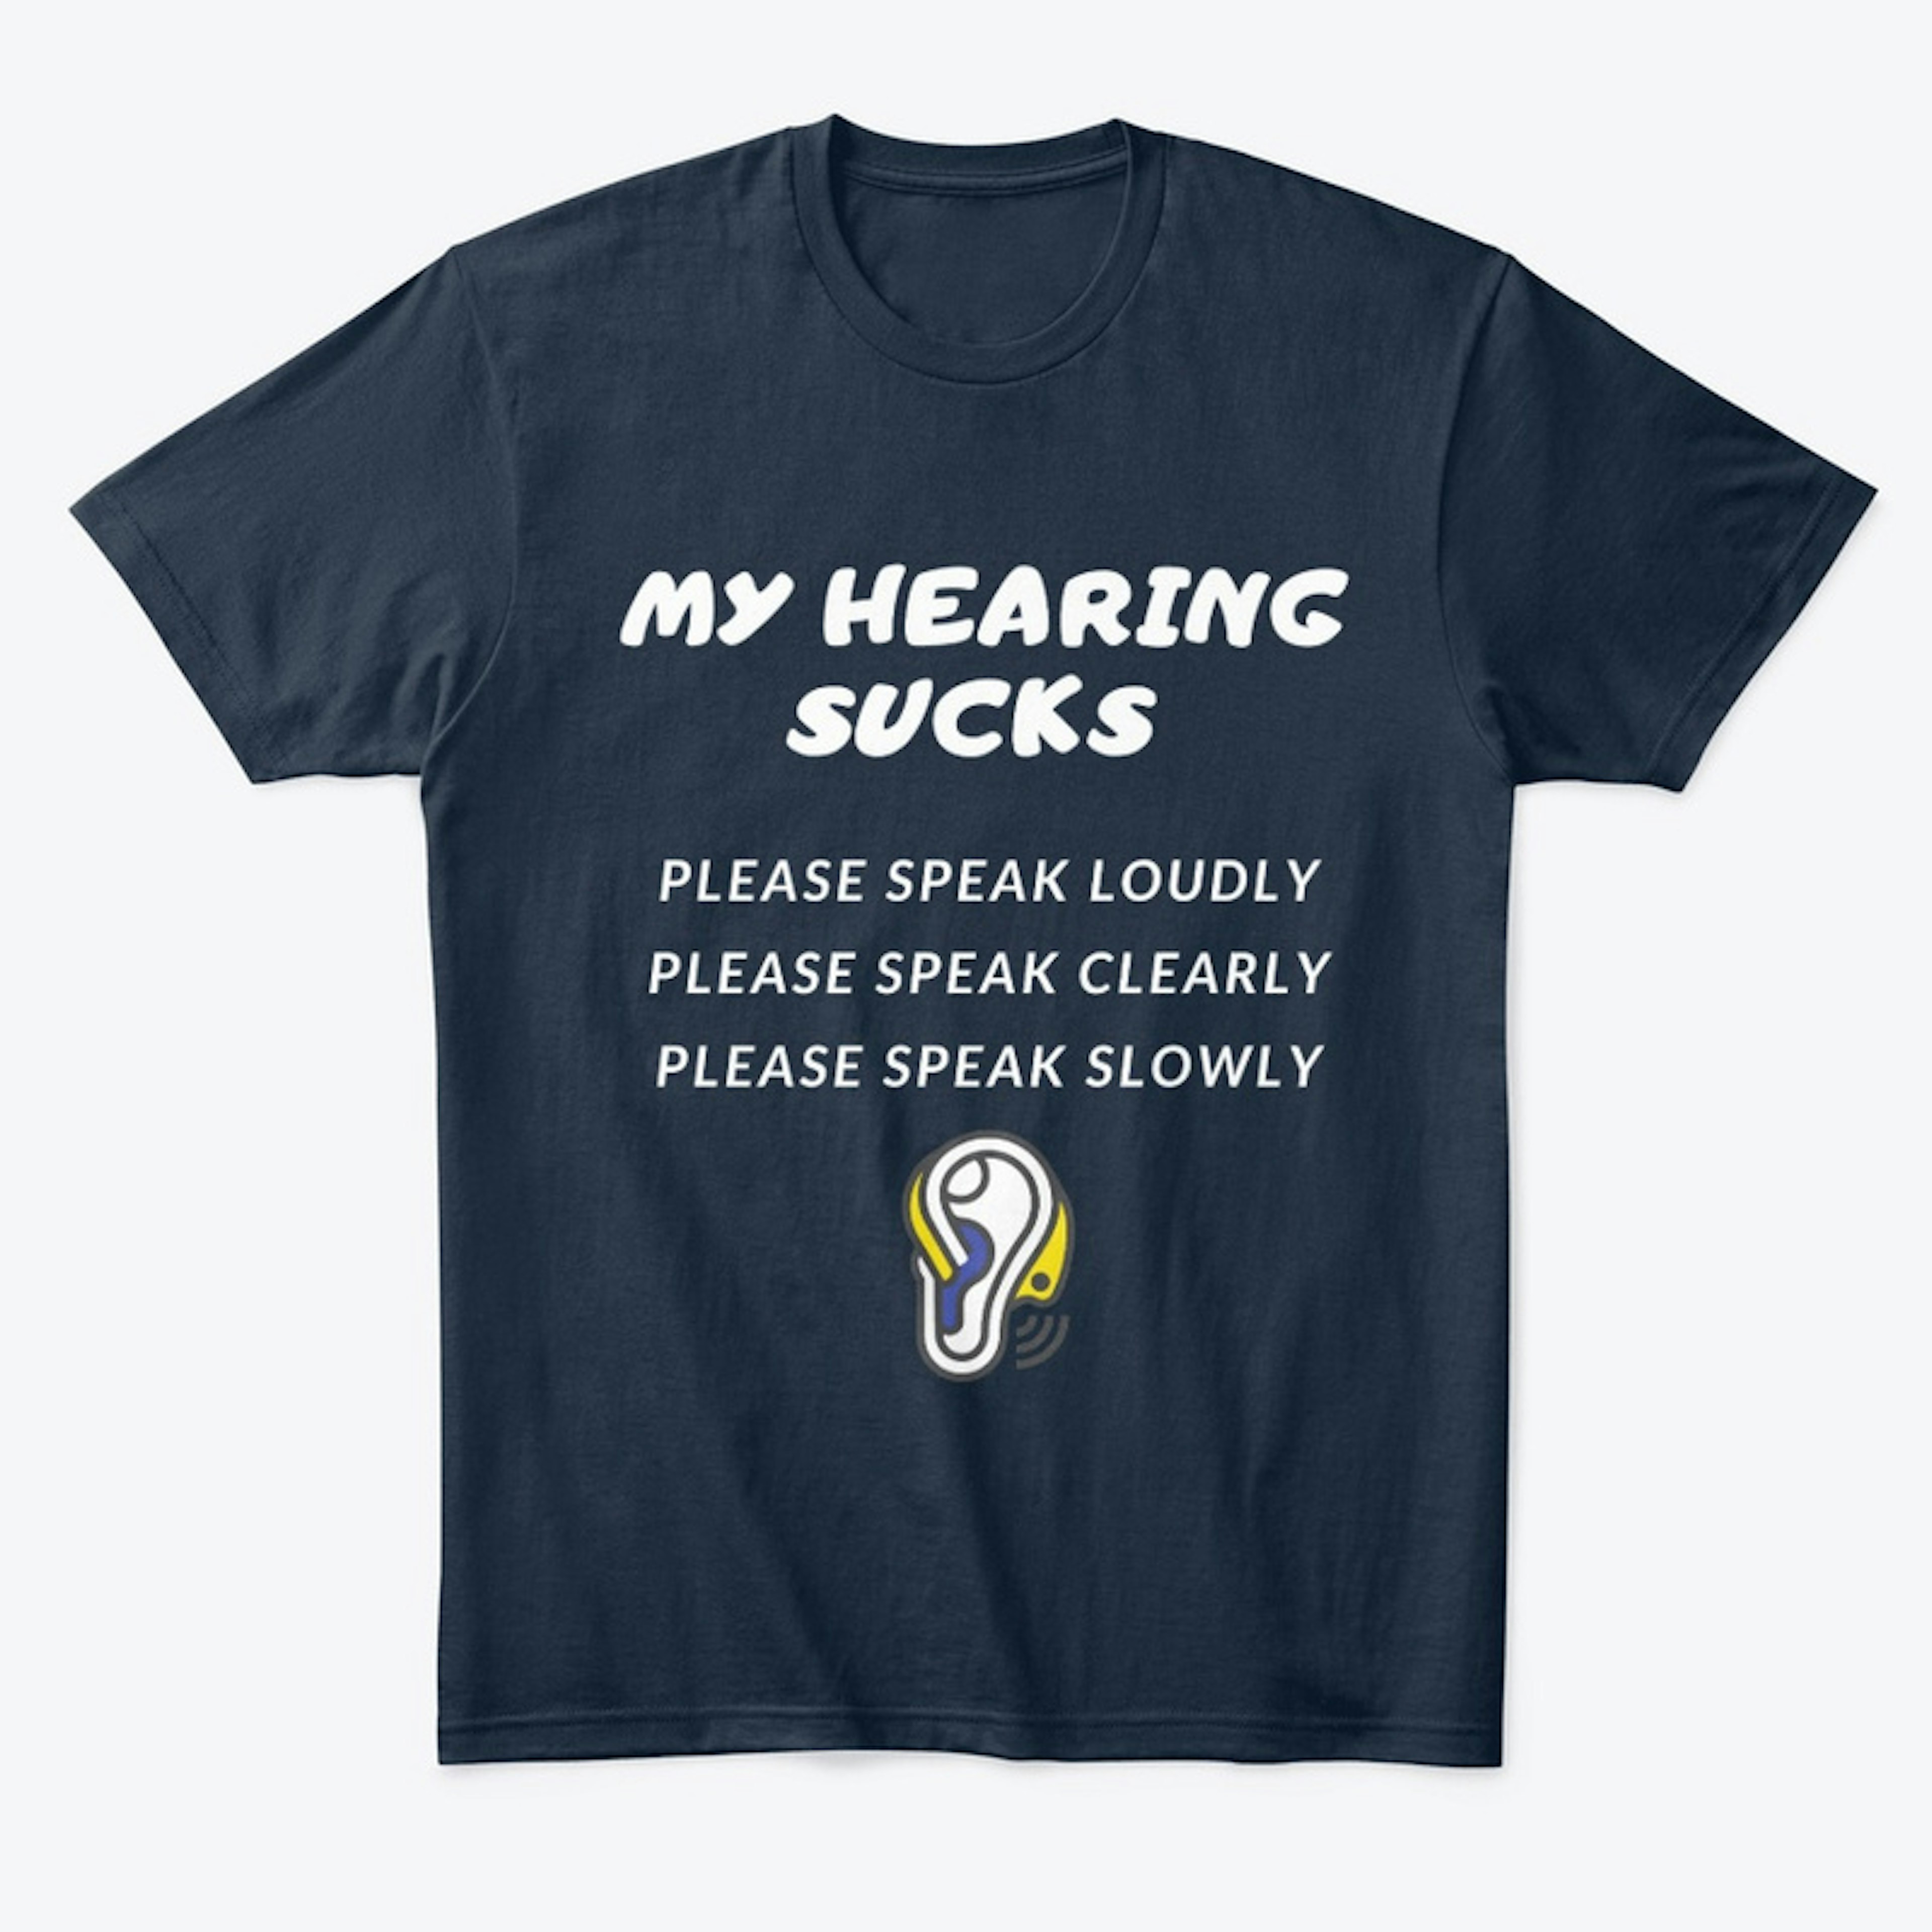 My Hearing Sucks version 1